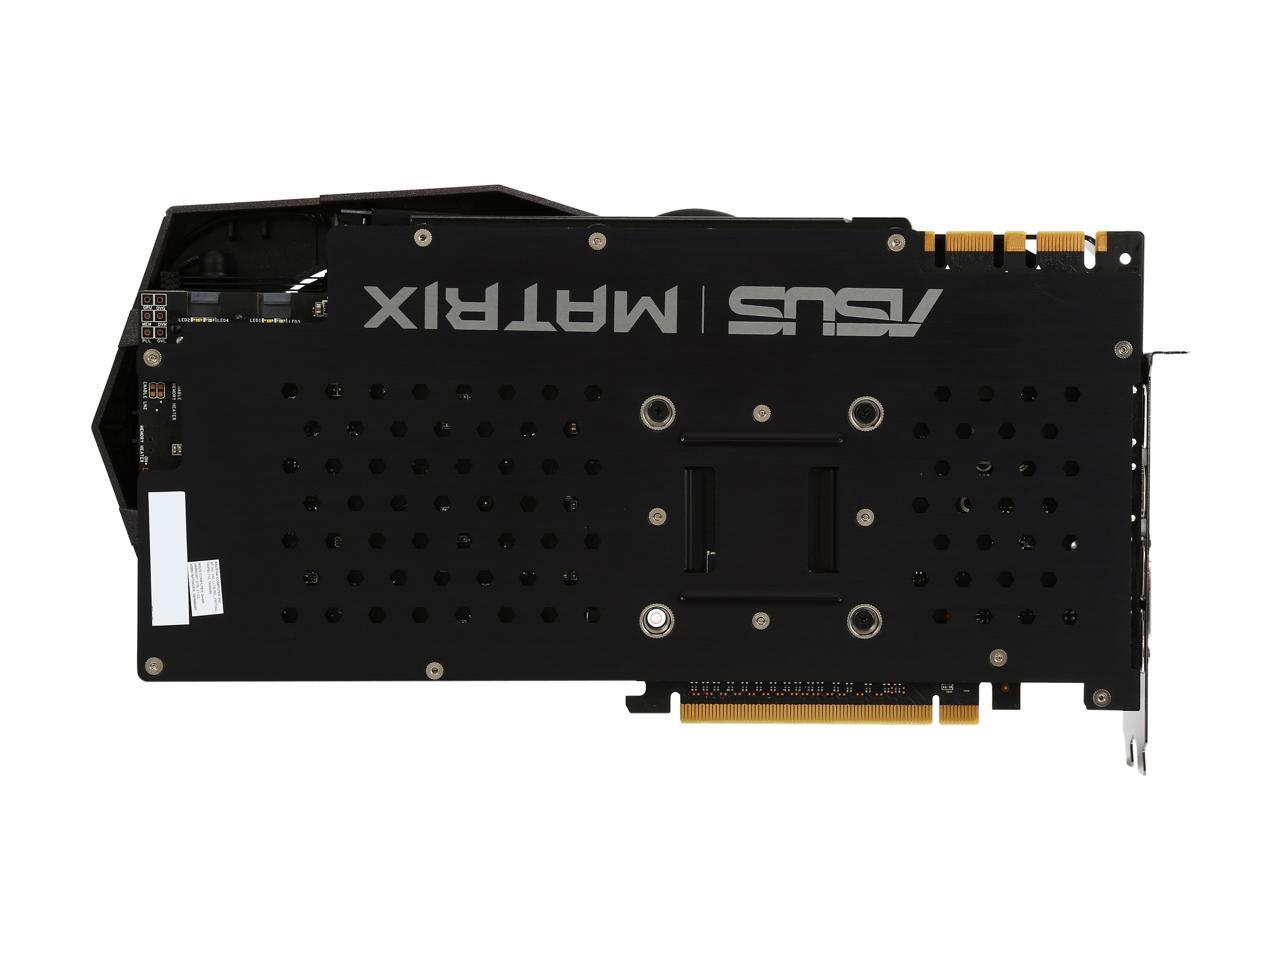 ASUS ROG GeForce GTX 980 MATRIX-GTX980-P-4GD5 4GB 256-Bit GDDR5 PCI Express 3.0 HDCP Ready SLI Support Gaming Video Card